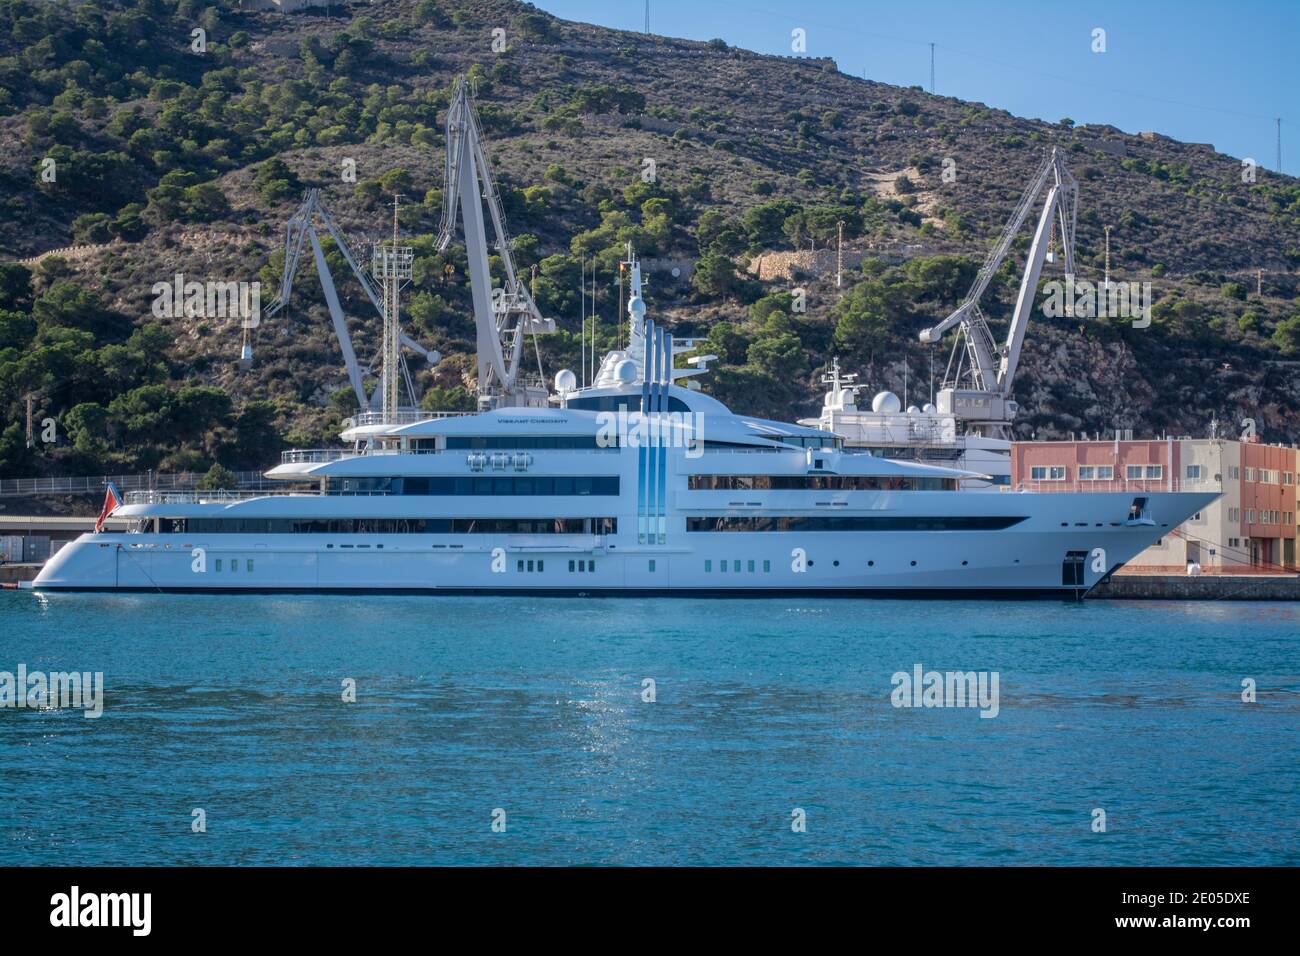 The yacht 'Vibrant Curiosity' moared in the marina at Cartagena, Murcia, Spain Stock Photo